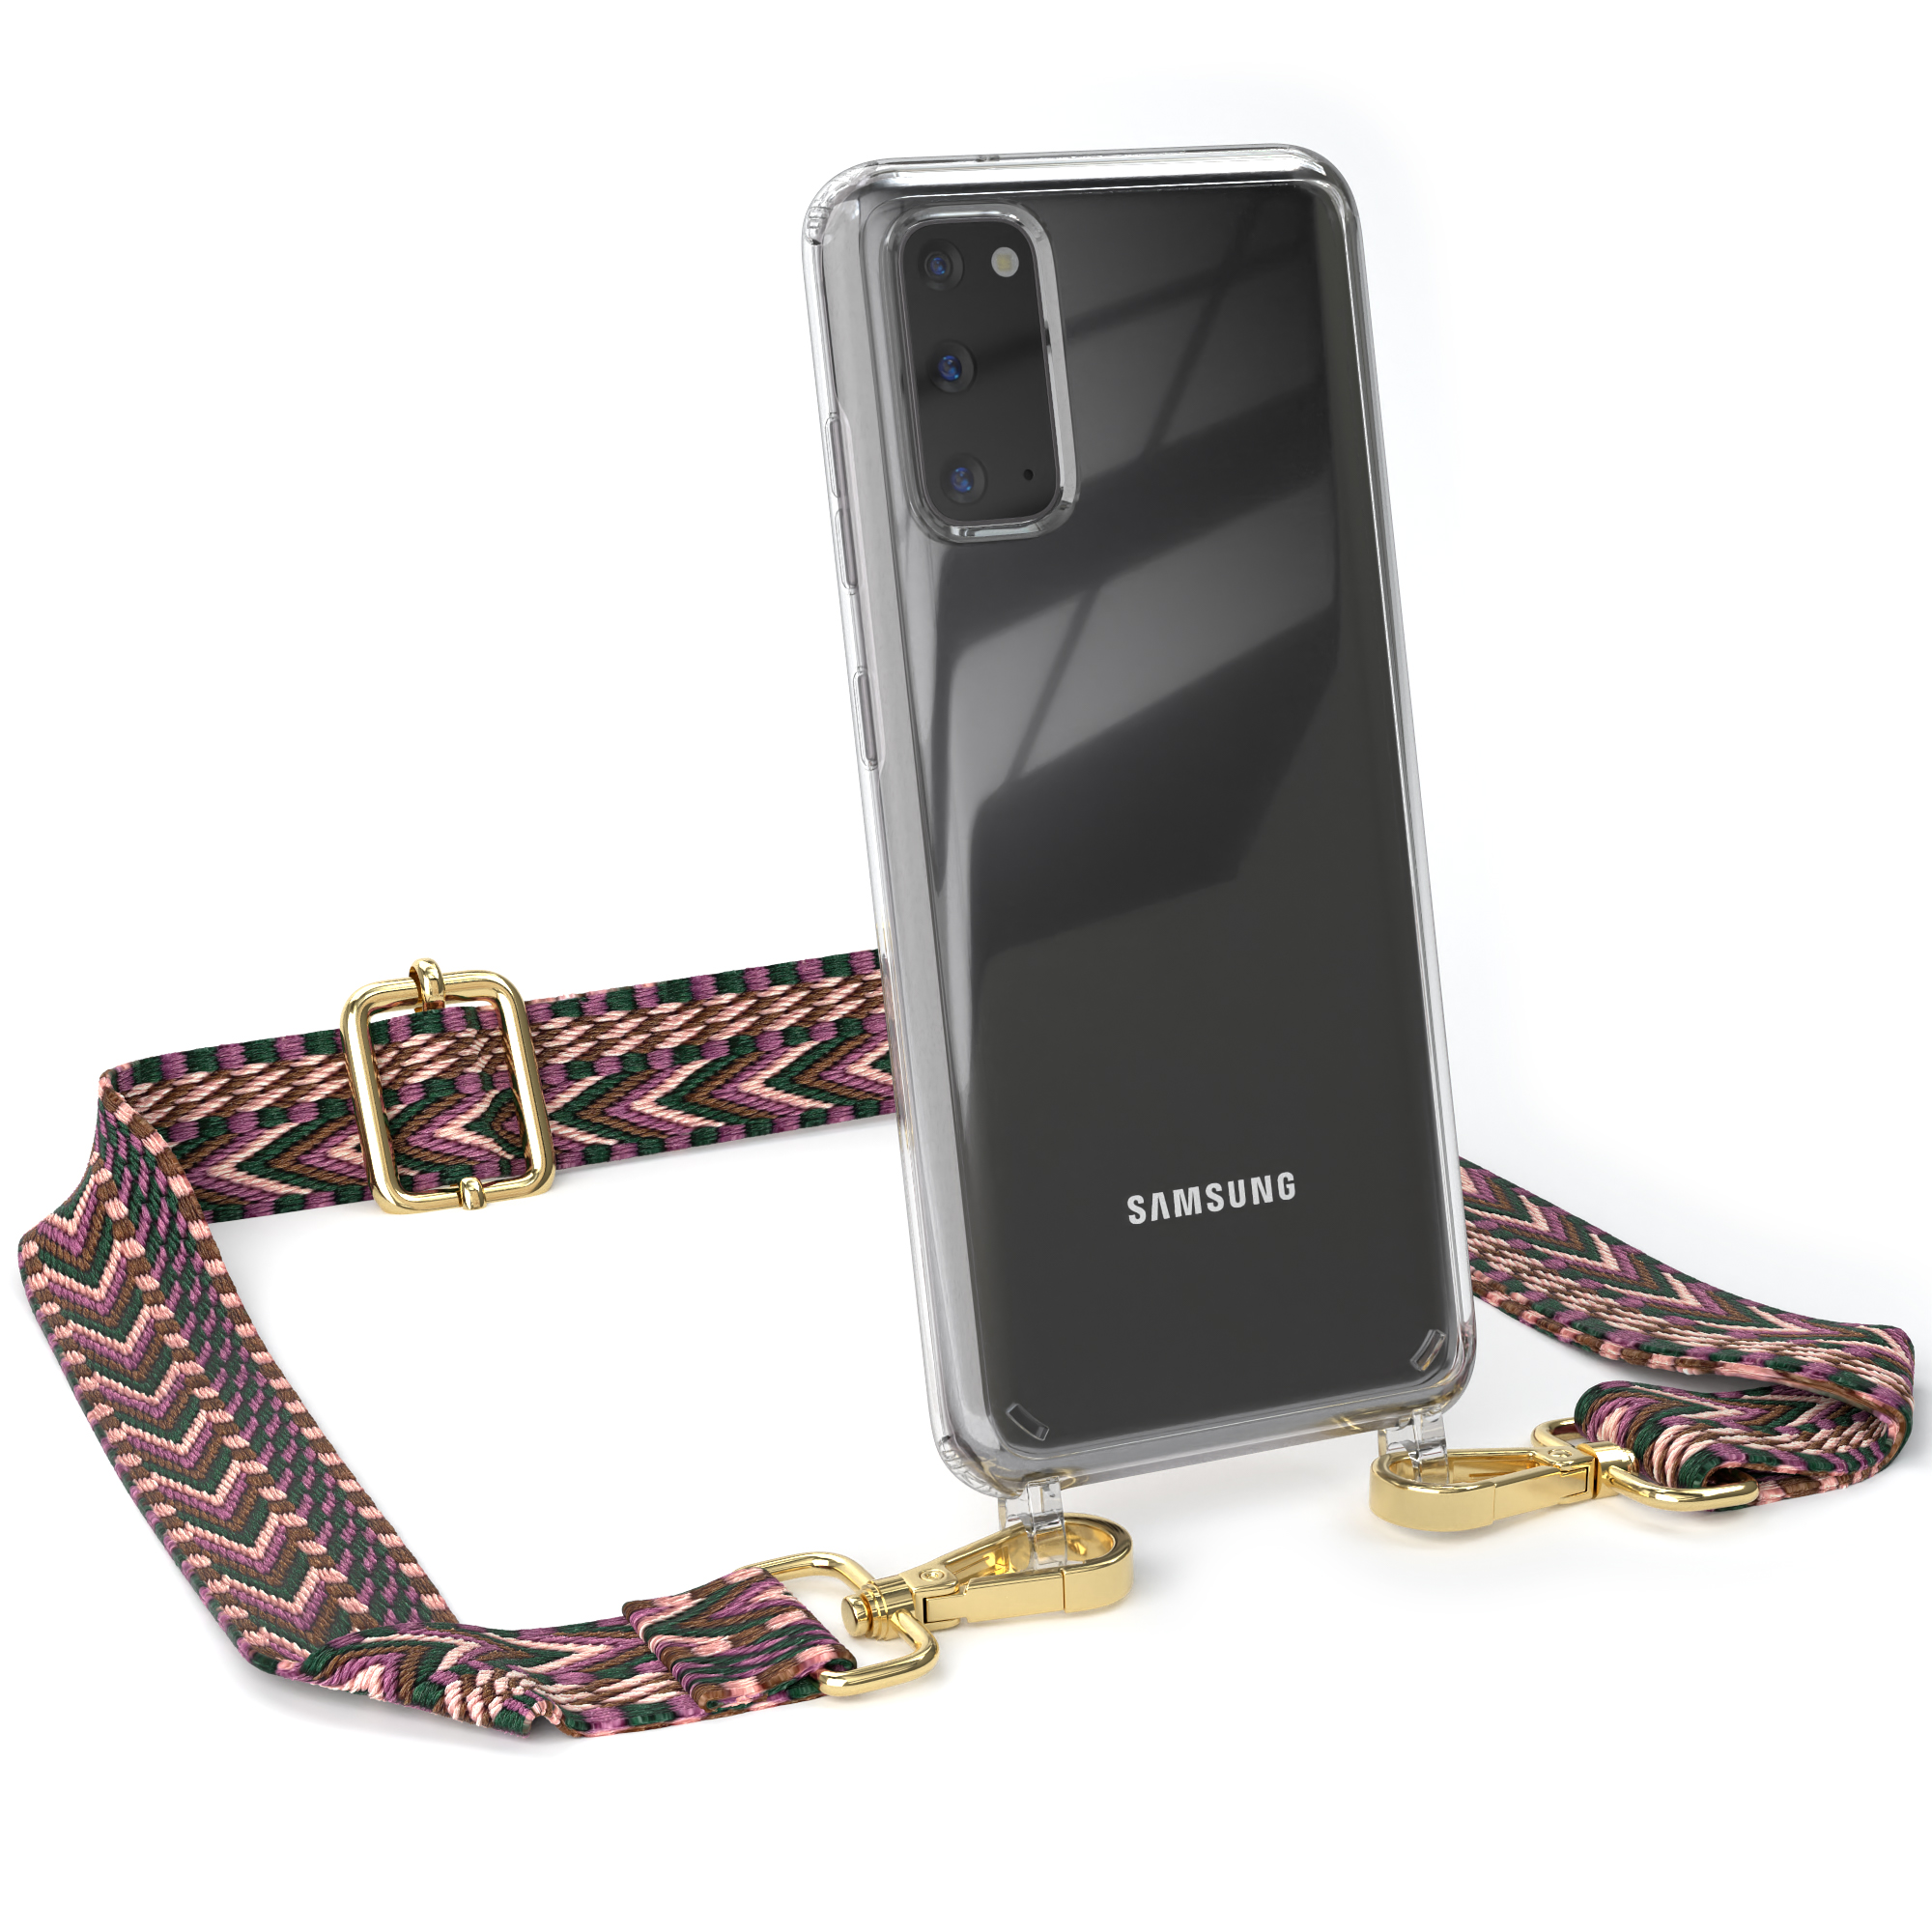 Samsung, CASE Style, Kordel Galaxy Beere EAZY Rosa mit S20, Handyhülle / Boho Umhängetasche, Transparente